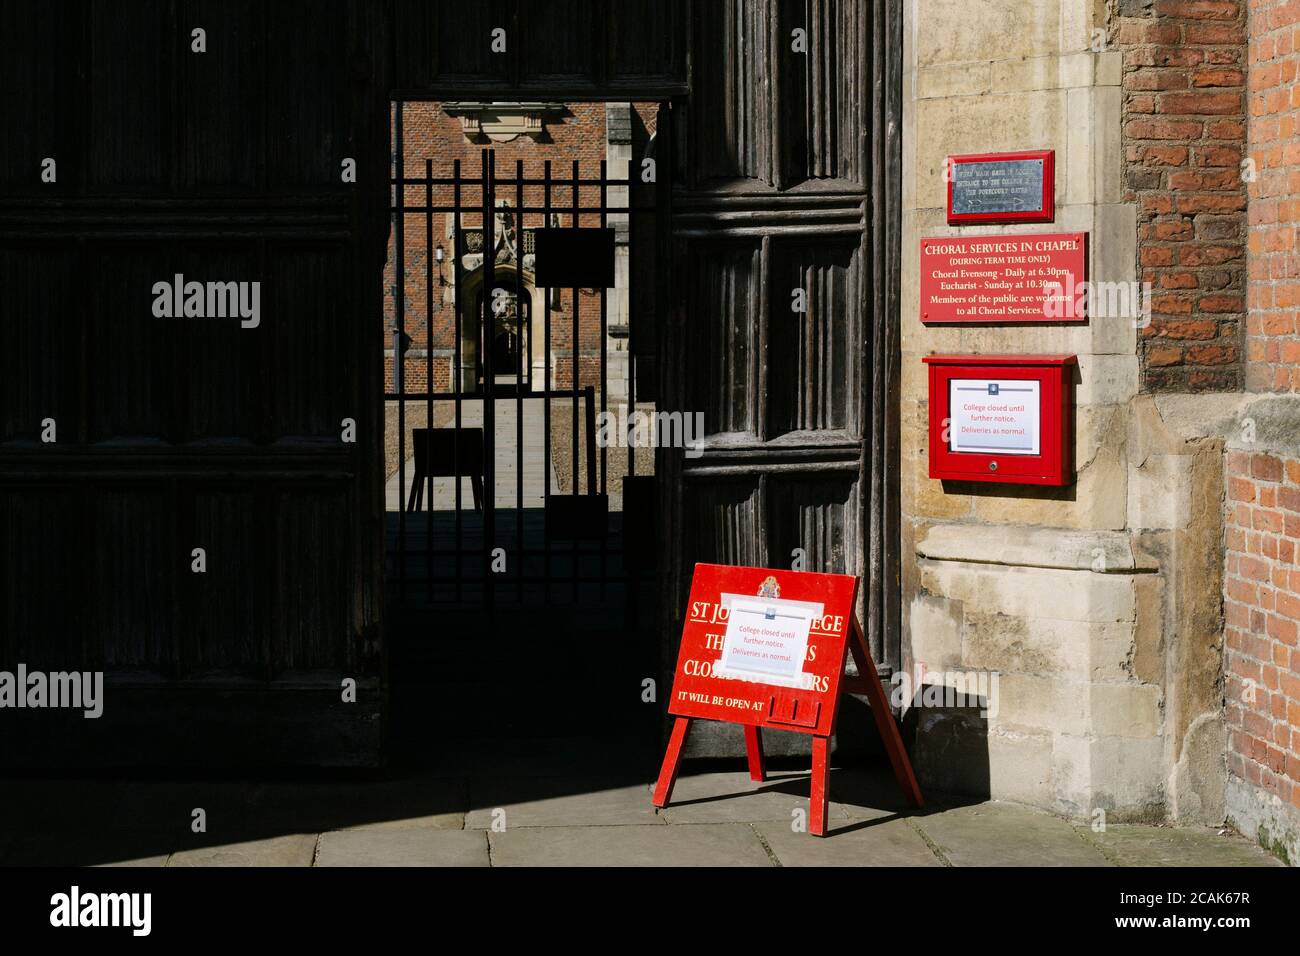 Closure notice at the entrance of St John's college at Cambridge University, UK, during the 2020 coronavirus pandemic. Stock Photo